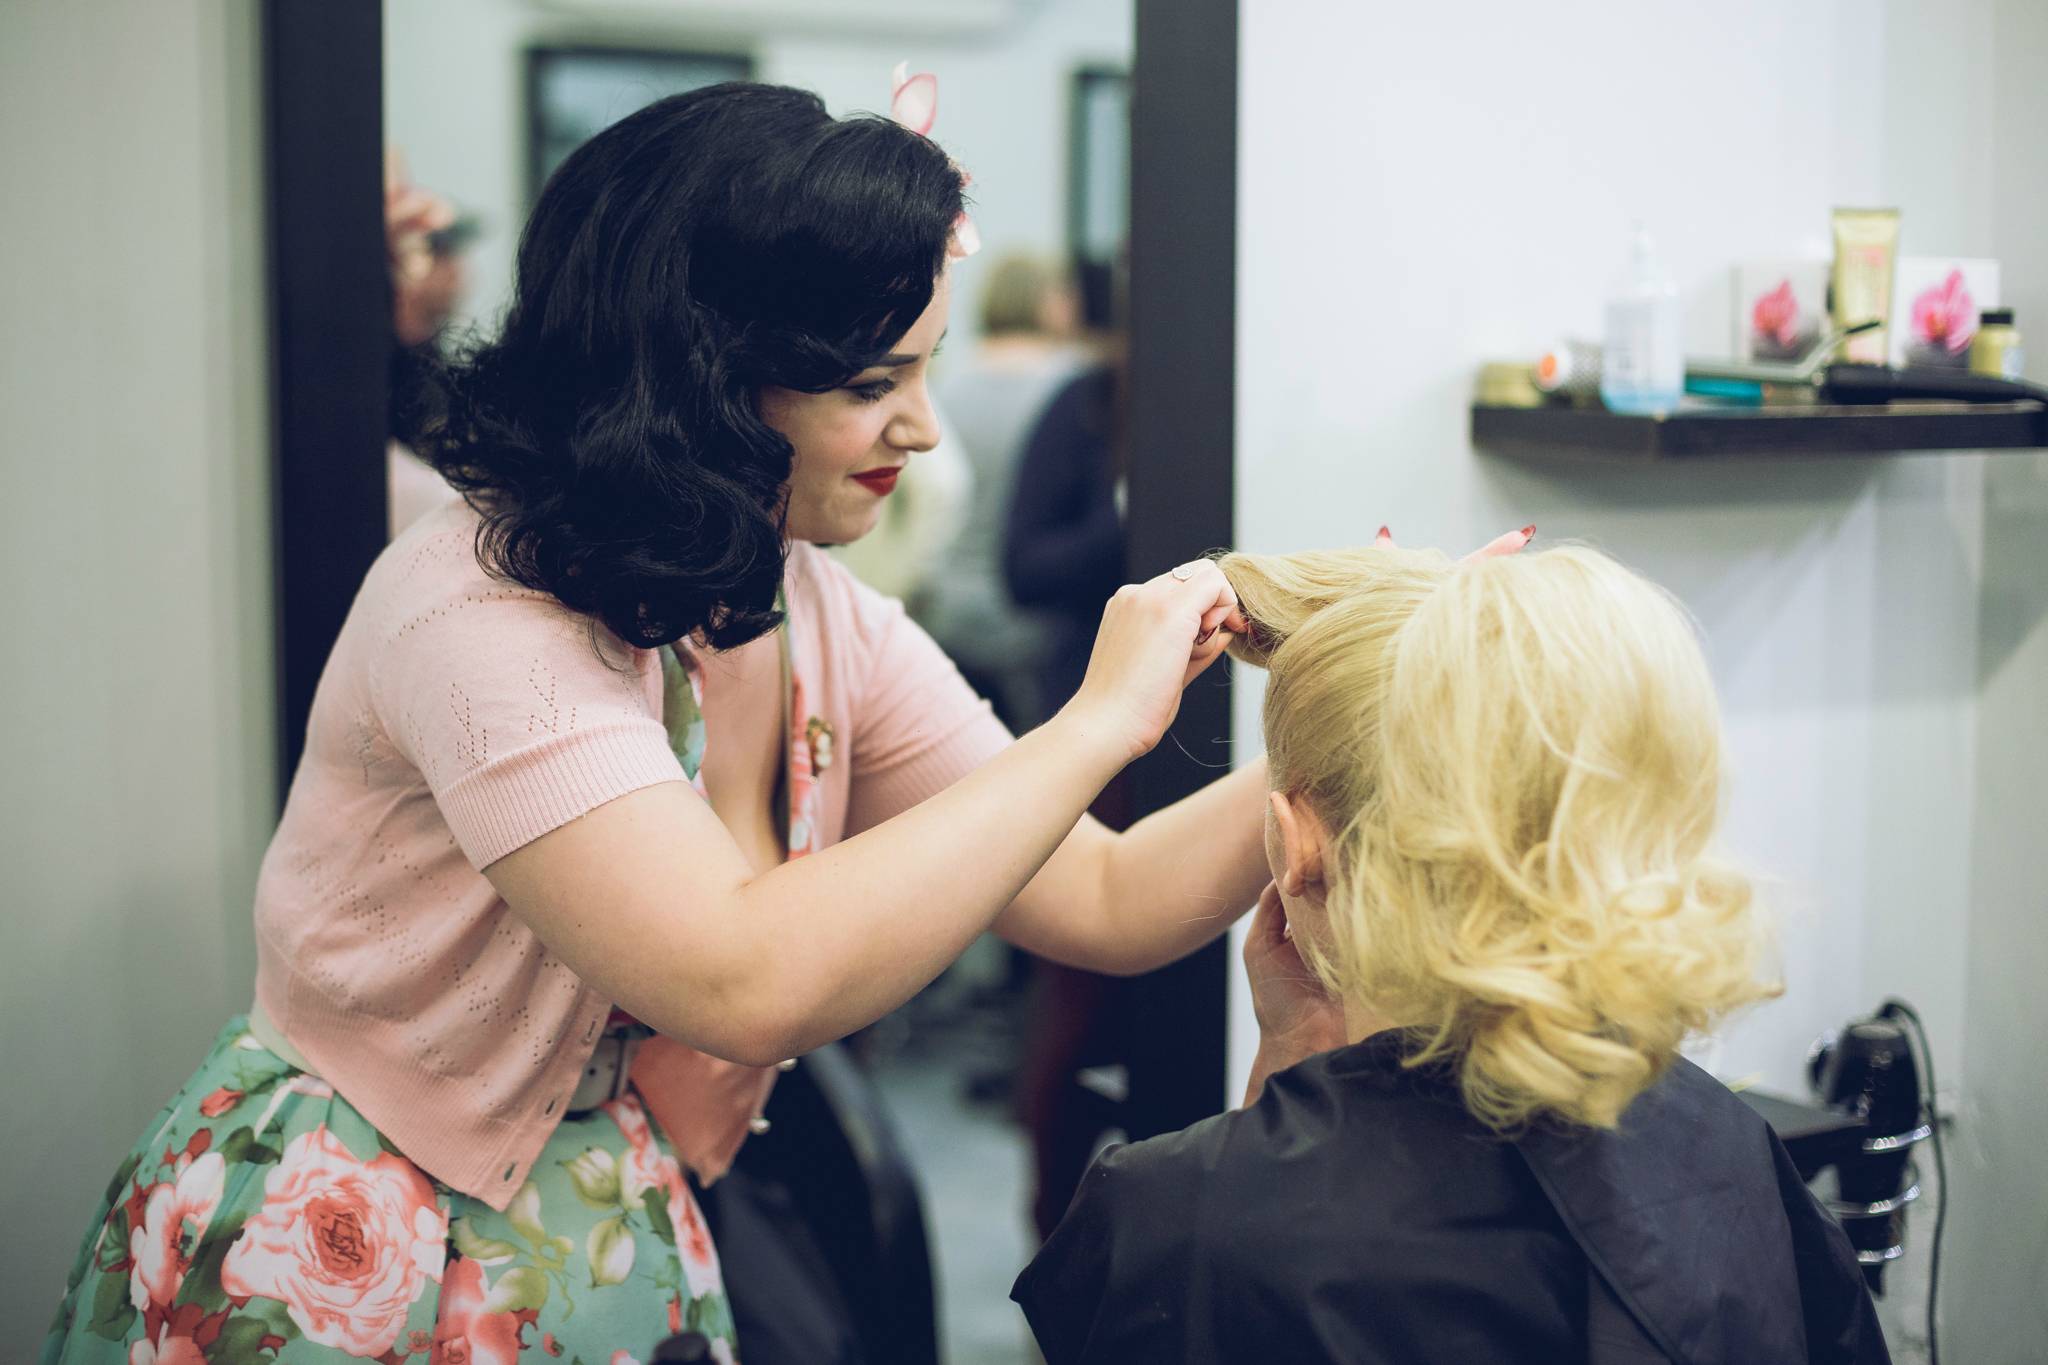 London hairdresser makes prices gender neutral